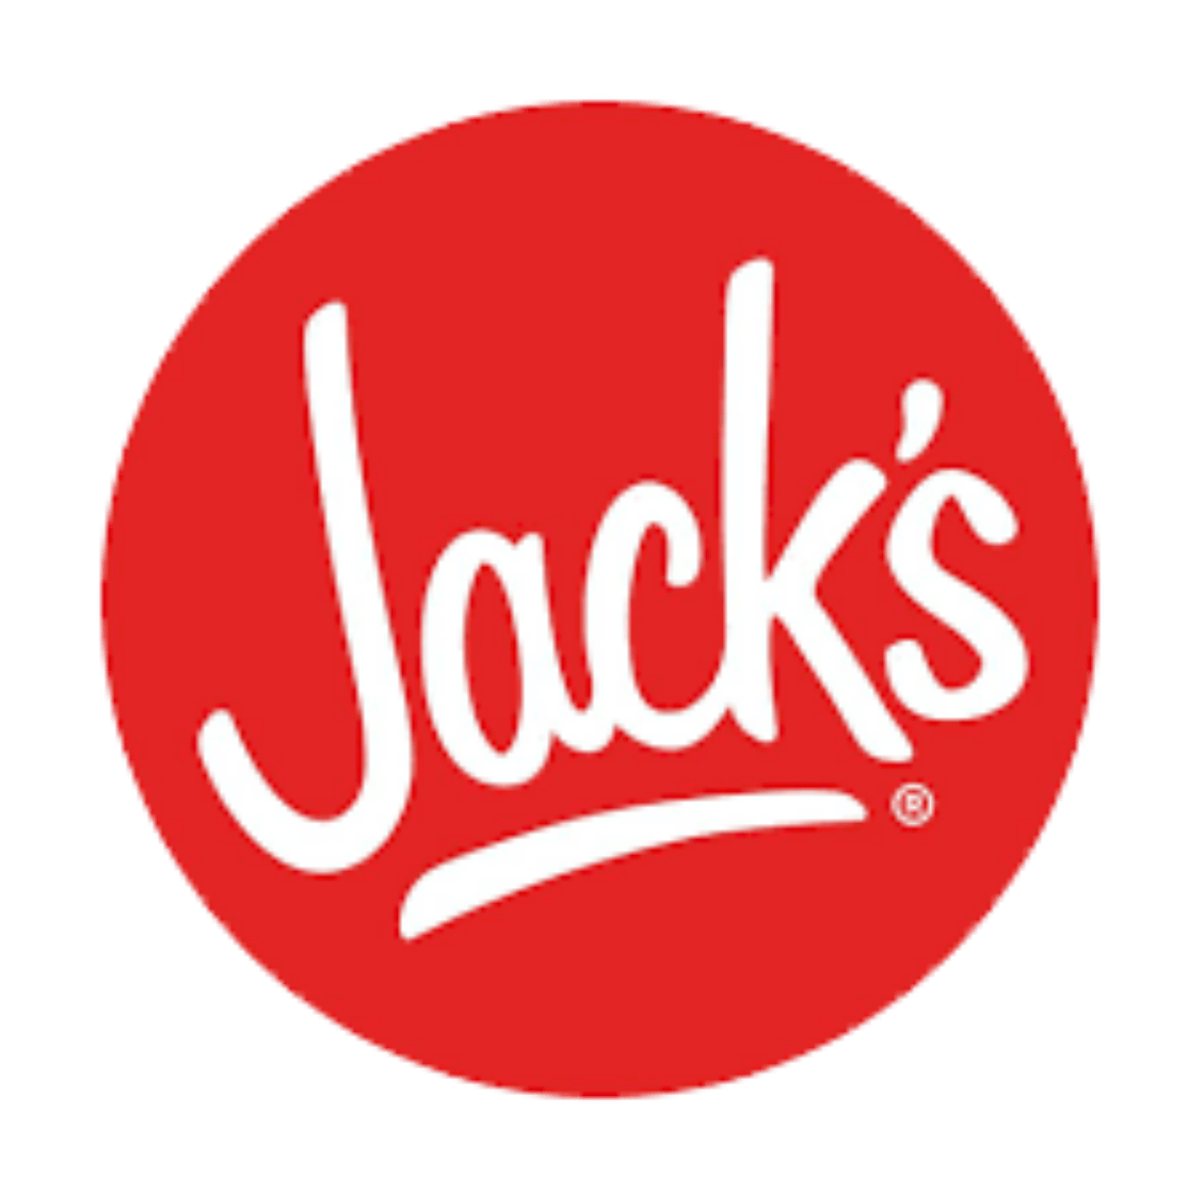 Jack's Logo - Jack's